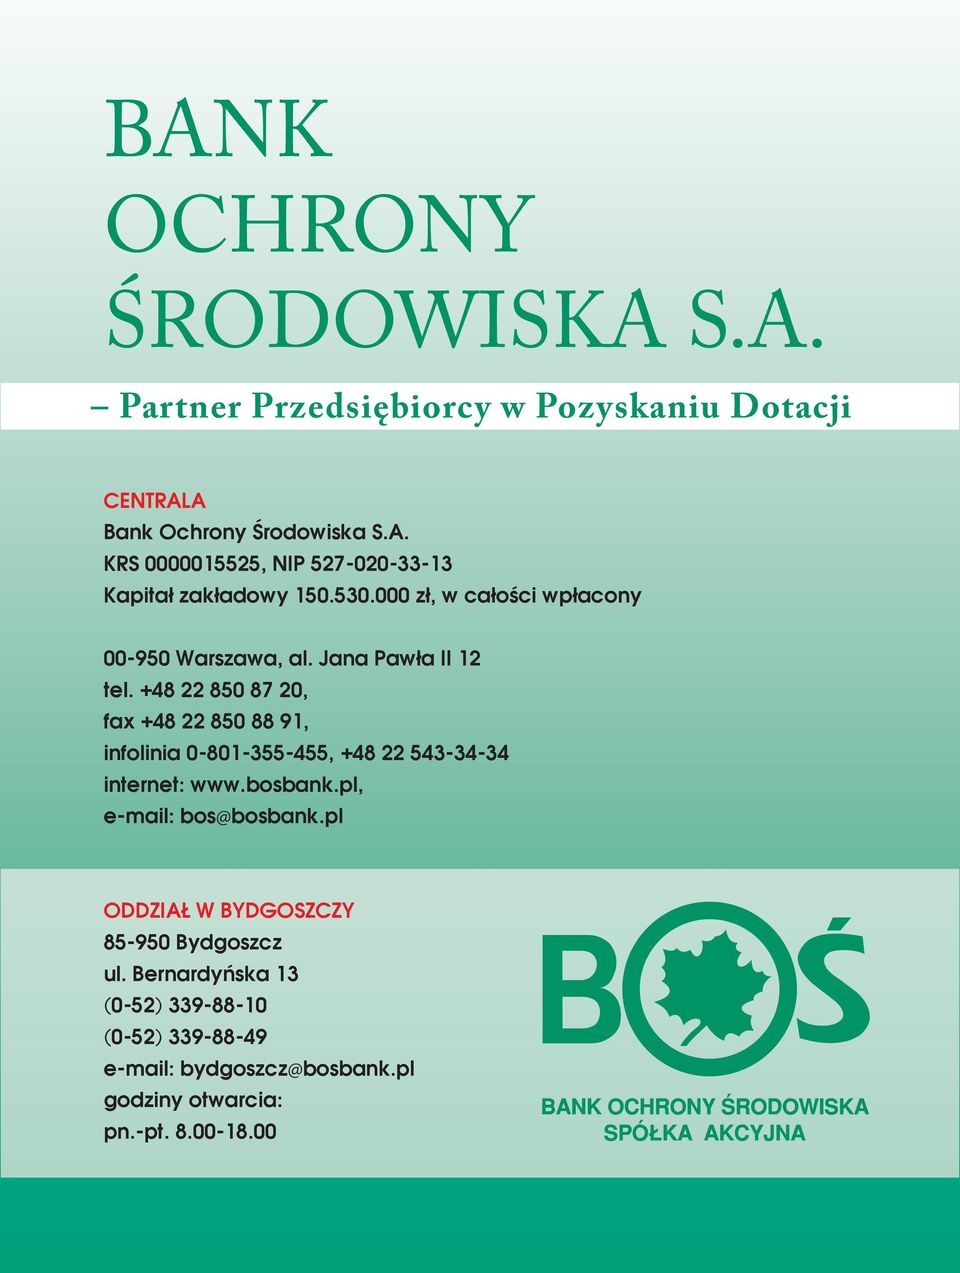 +48 22 850 87 20, fax +48 22 850 88 91, infolinia 0-801-355-455, +48 22 543-34-34 internet: www.bosbank.pl, e-mail: bos@bosbank.